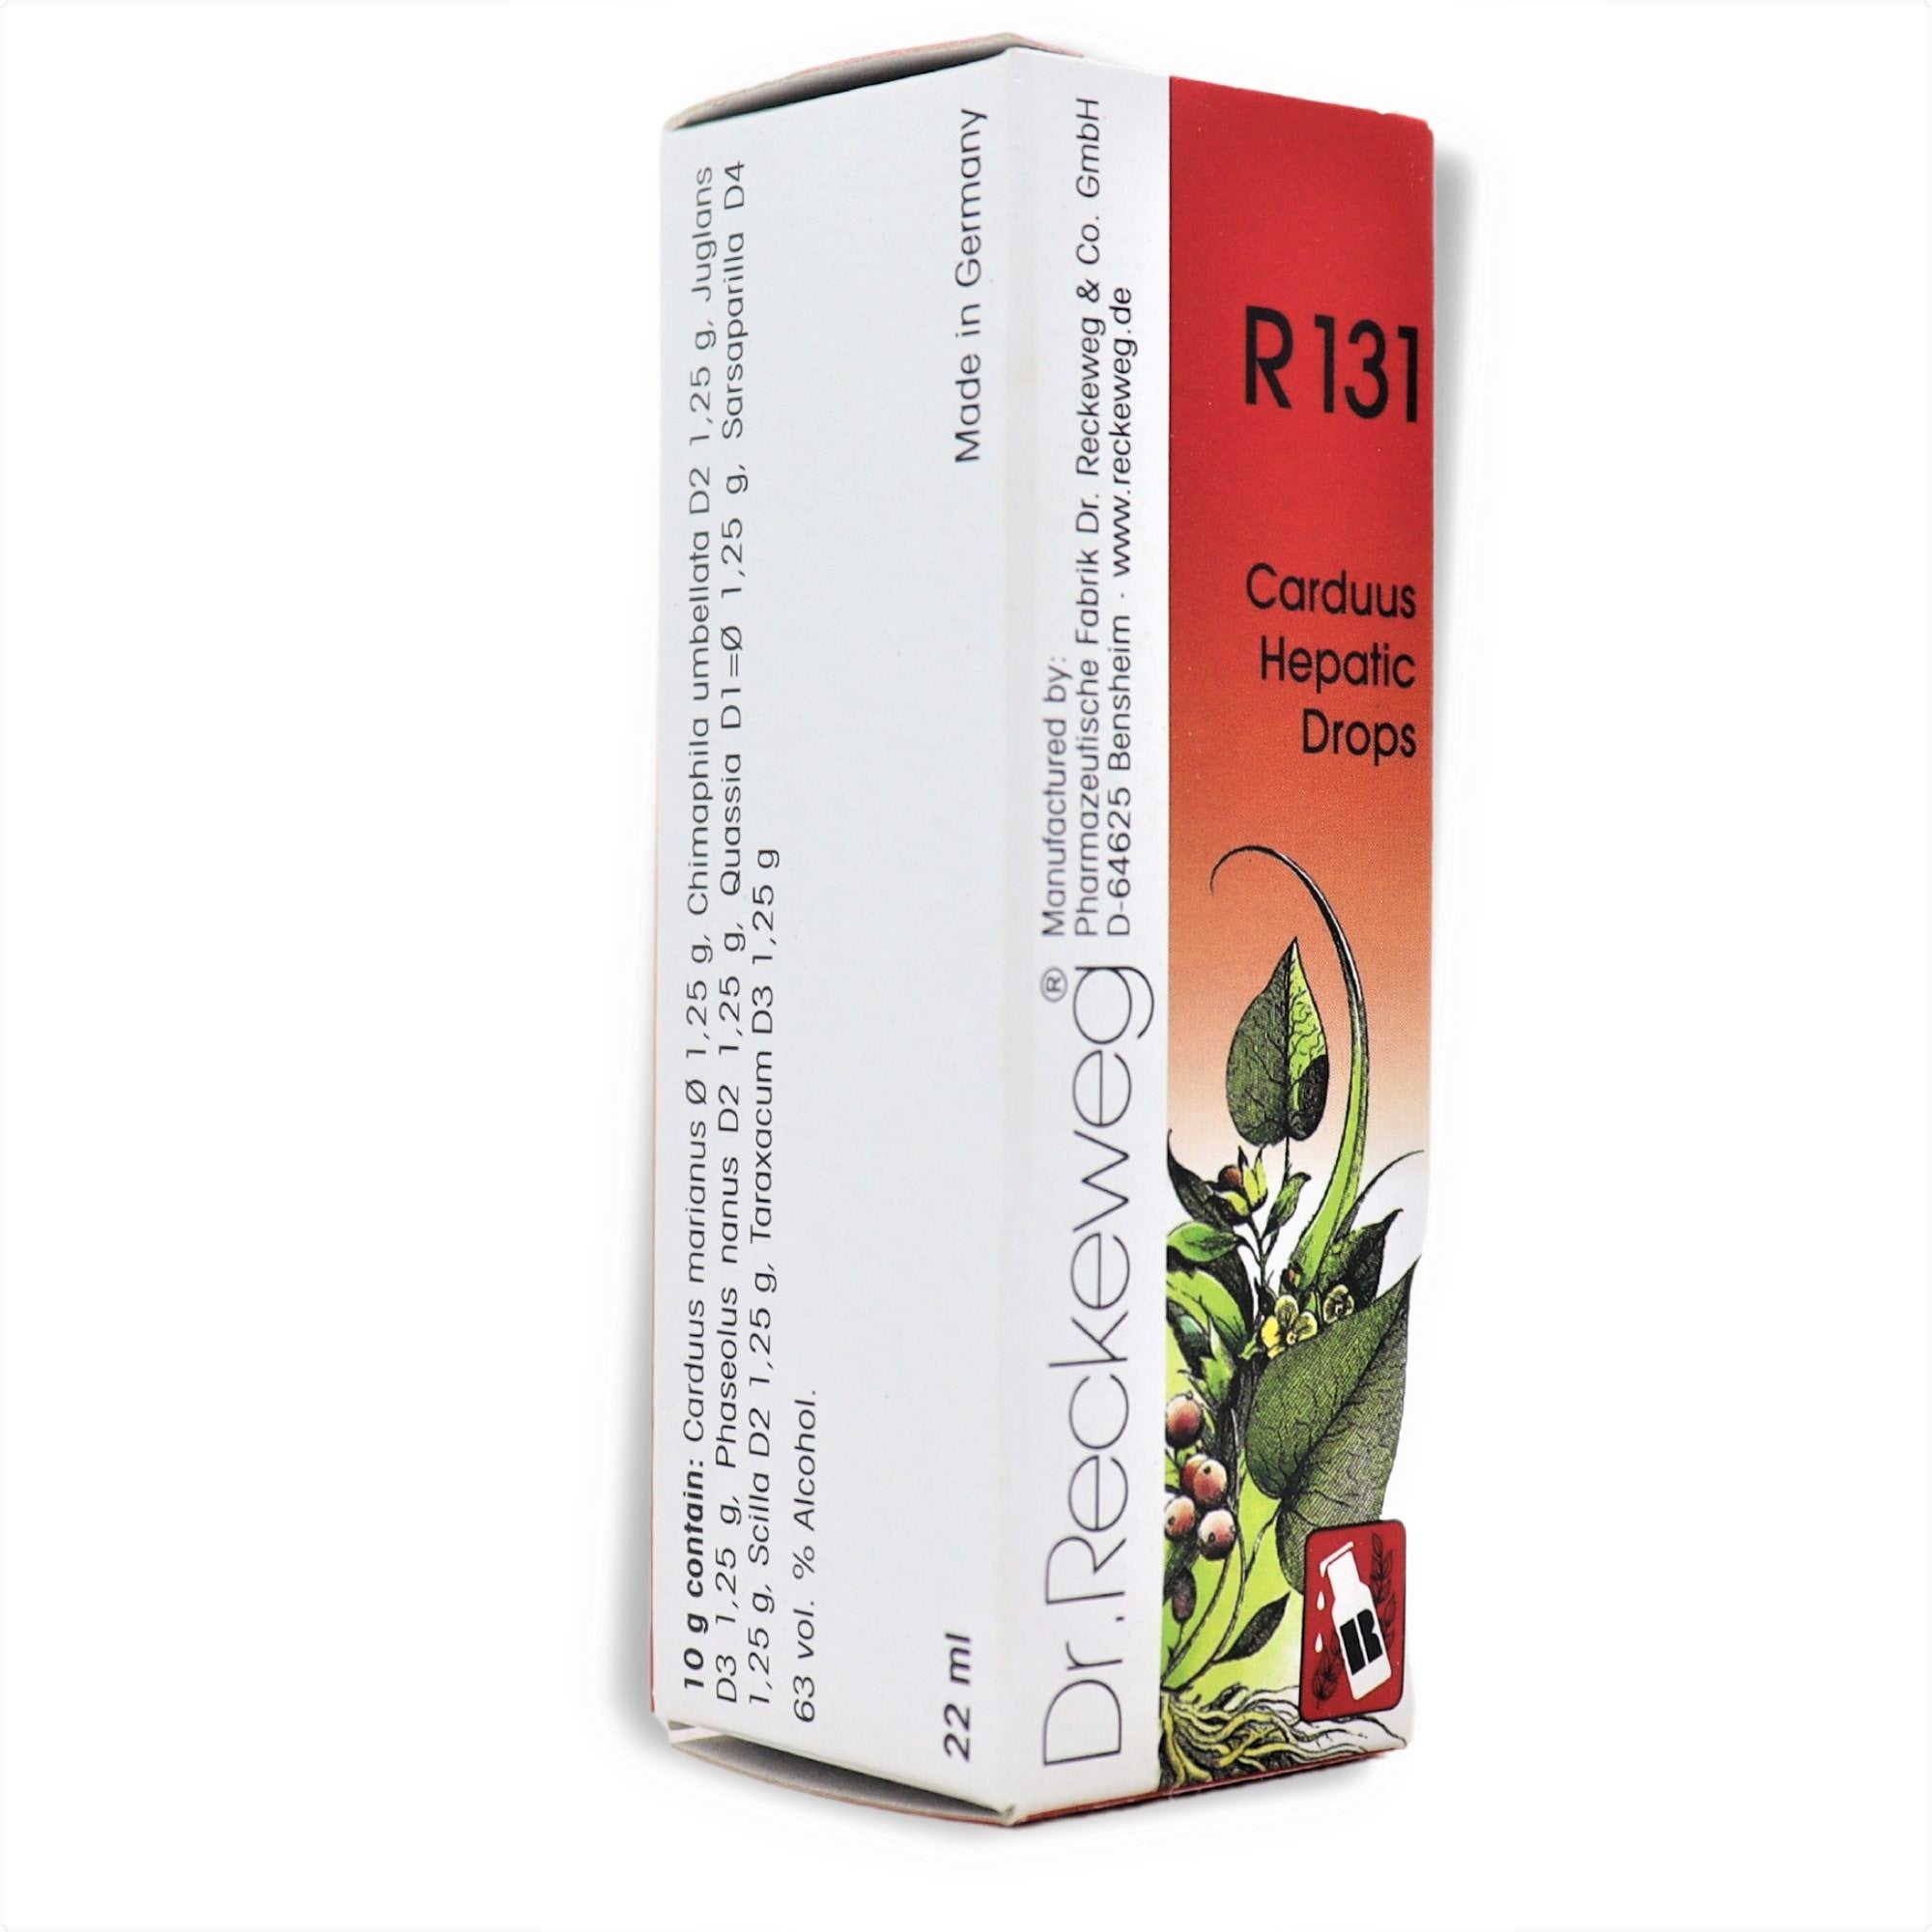 R-131 (Carduus Hepatic)